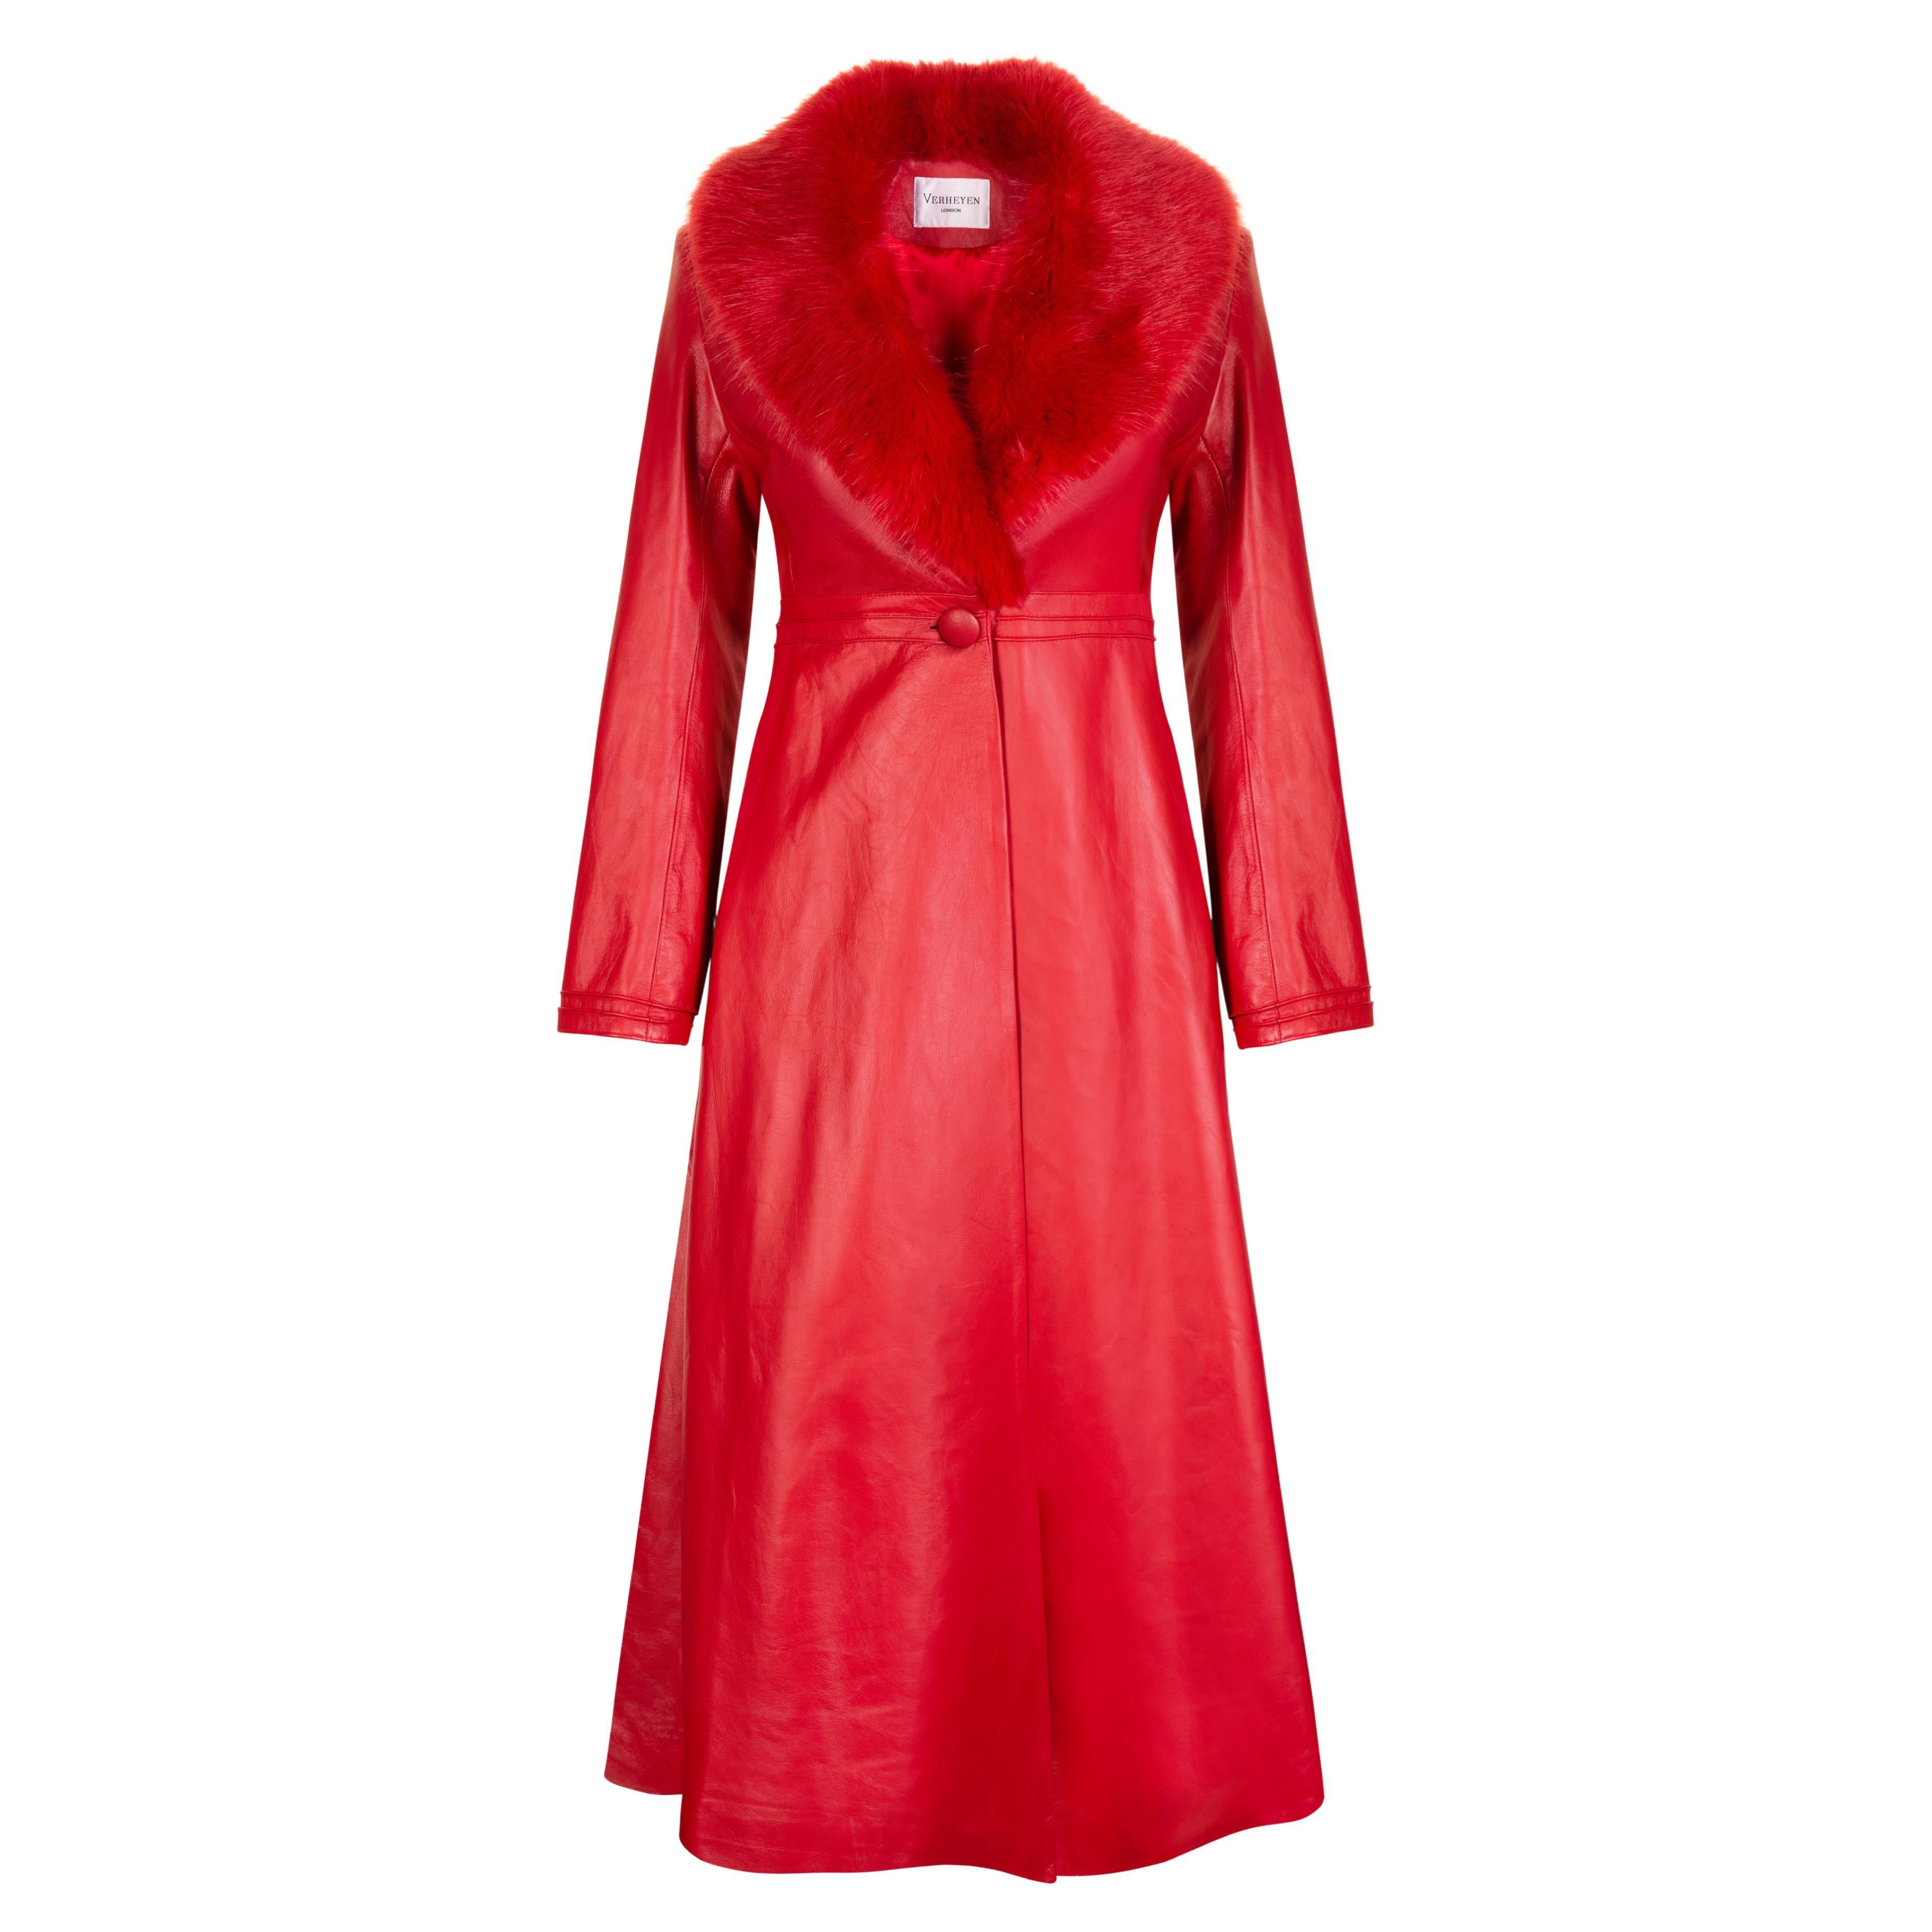 Verheyen London Edward Leather Coat with Faux Fur Collar in Red - Size uk 12